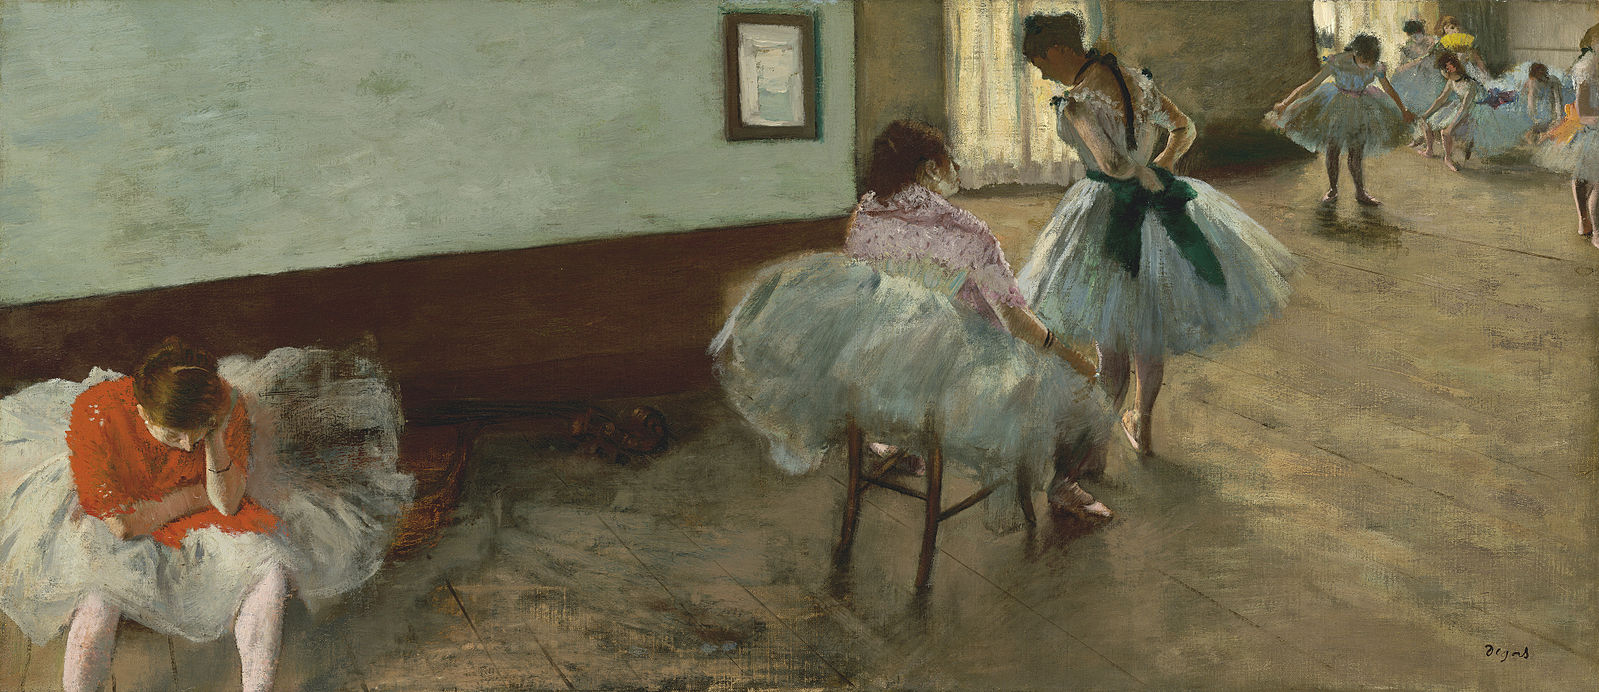 “The Dance Lesson” by Edgar Degas